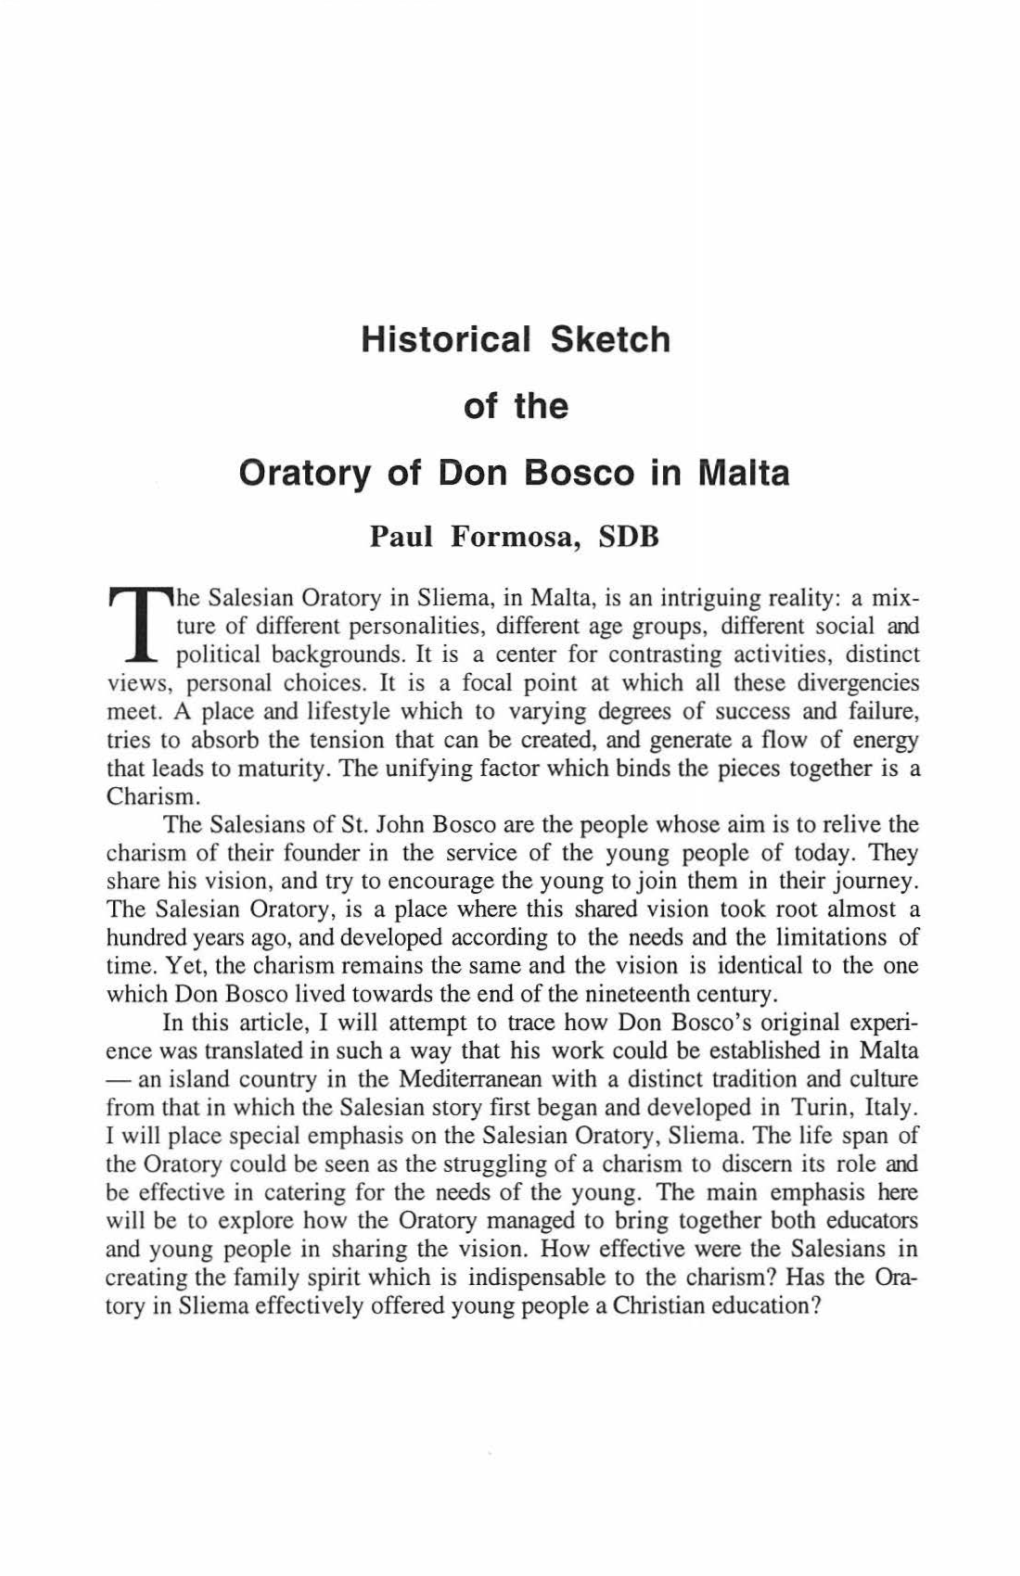 Historical Sketch of the Oratory of Don Bosco in Malta Paul Formosa, SDB